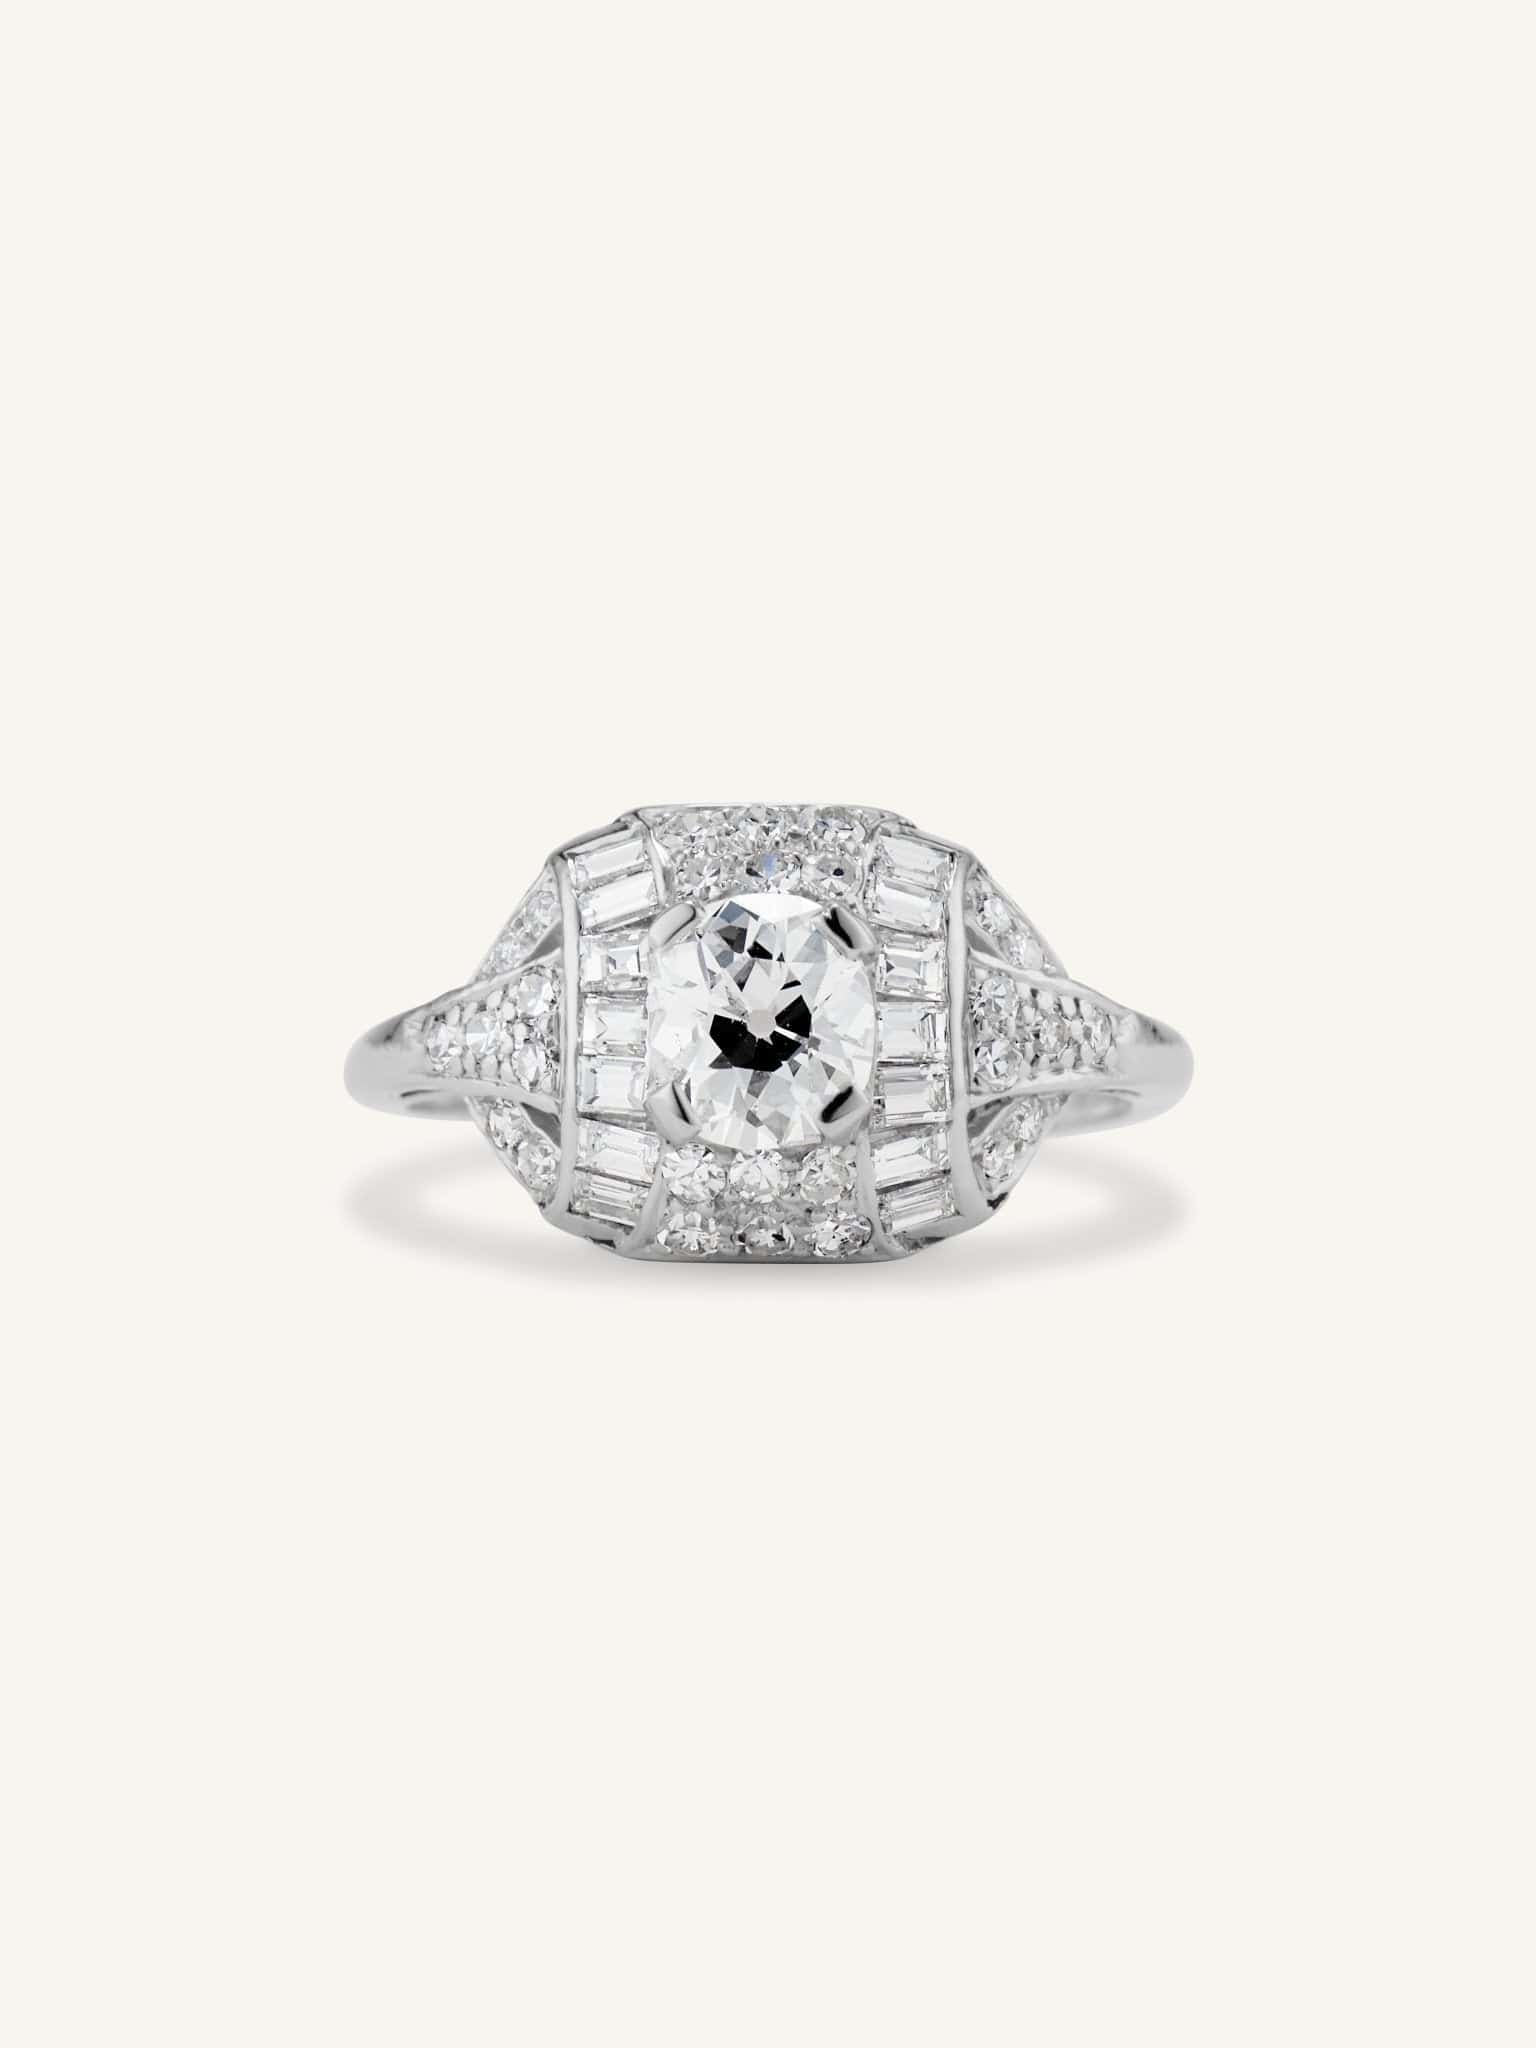 Engagement Rings - Diamond Engagement Rings - Jack Friedman